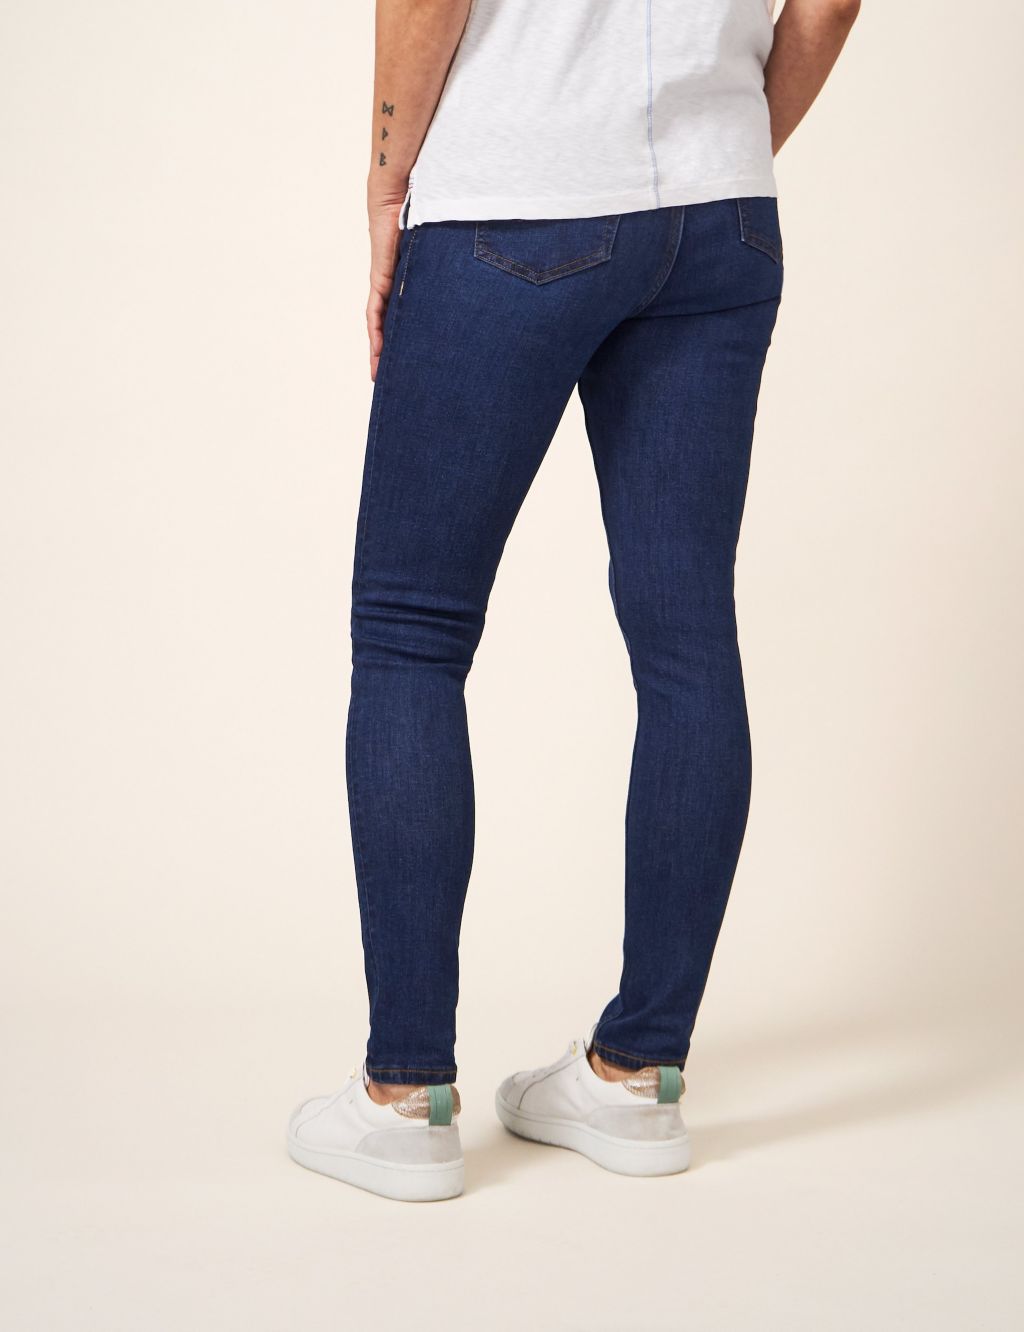 Skinny Jeans image 5